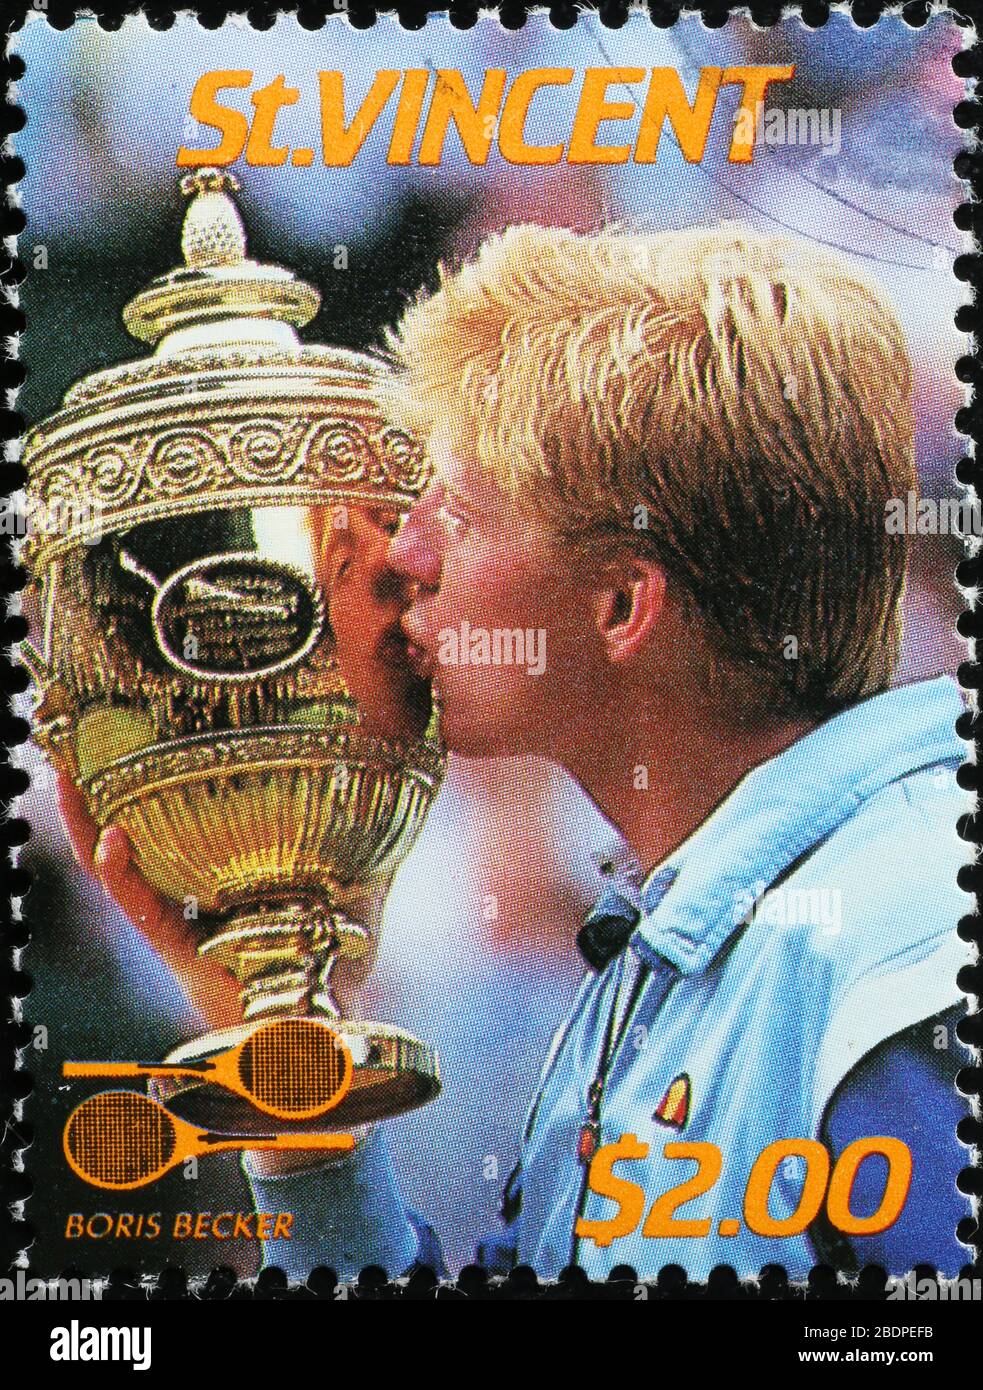 Tennis champion Boris Becker on postage stamp Stock Photo